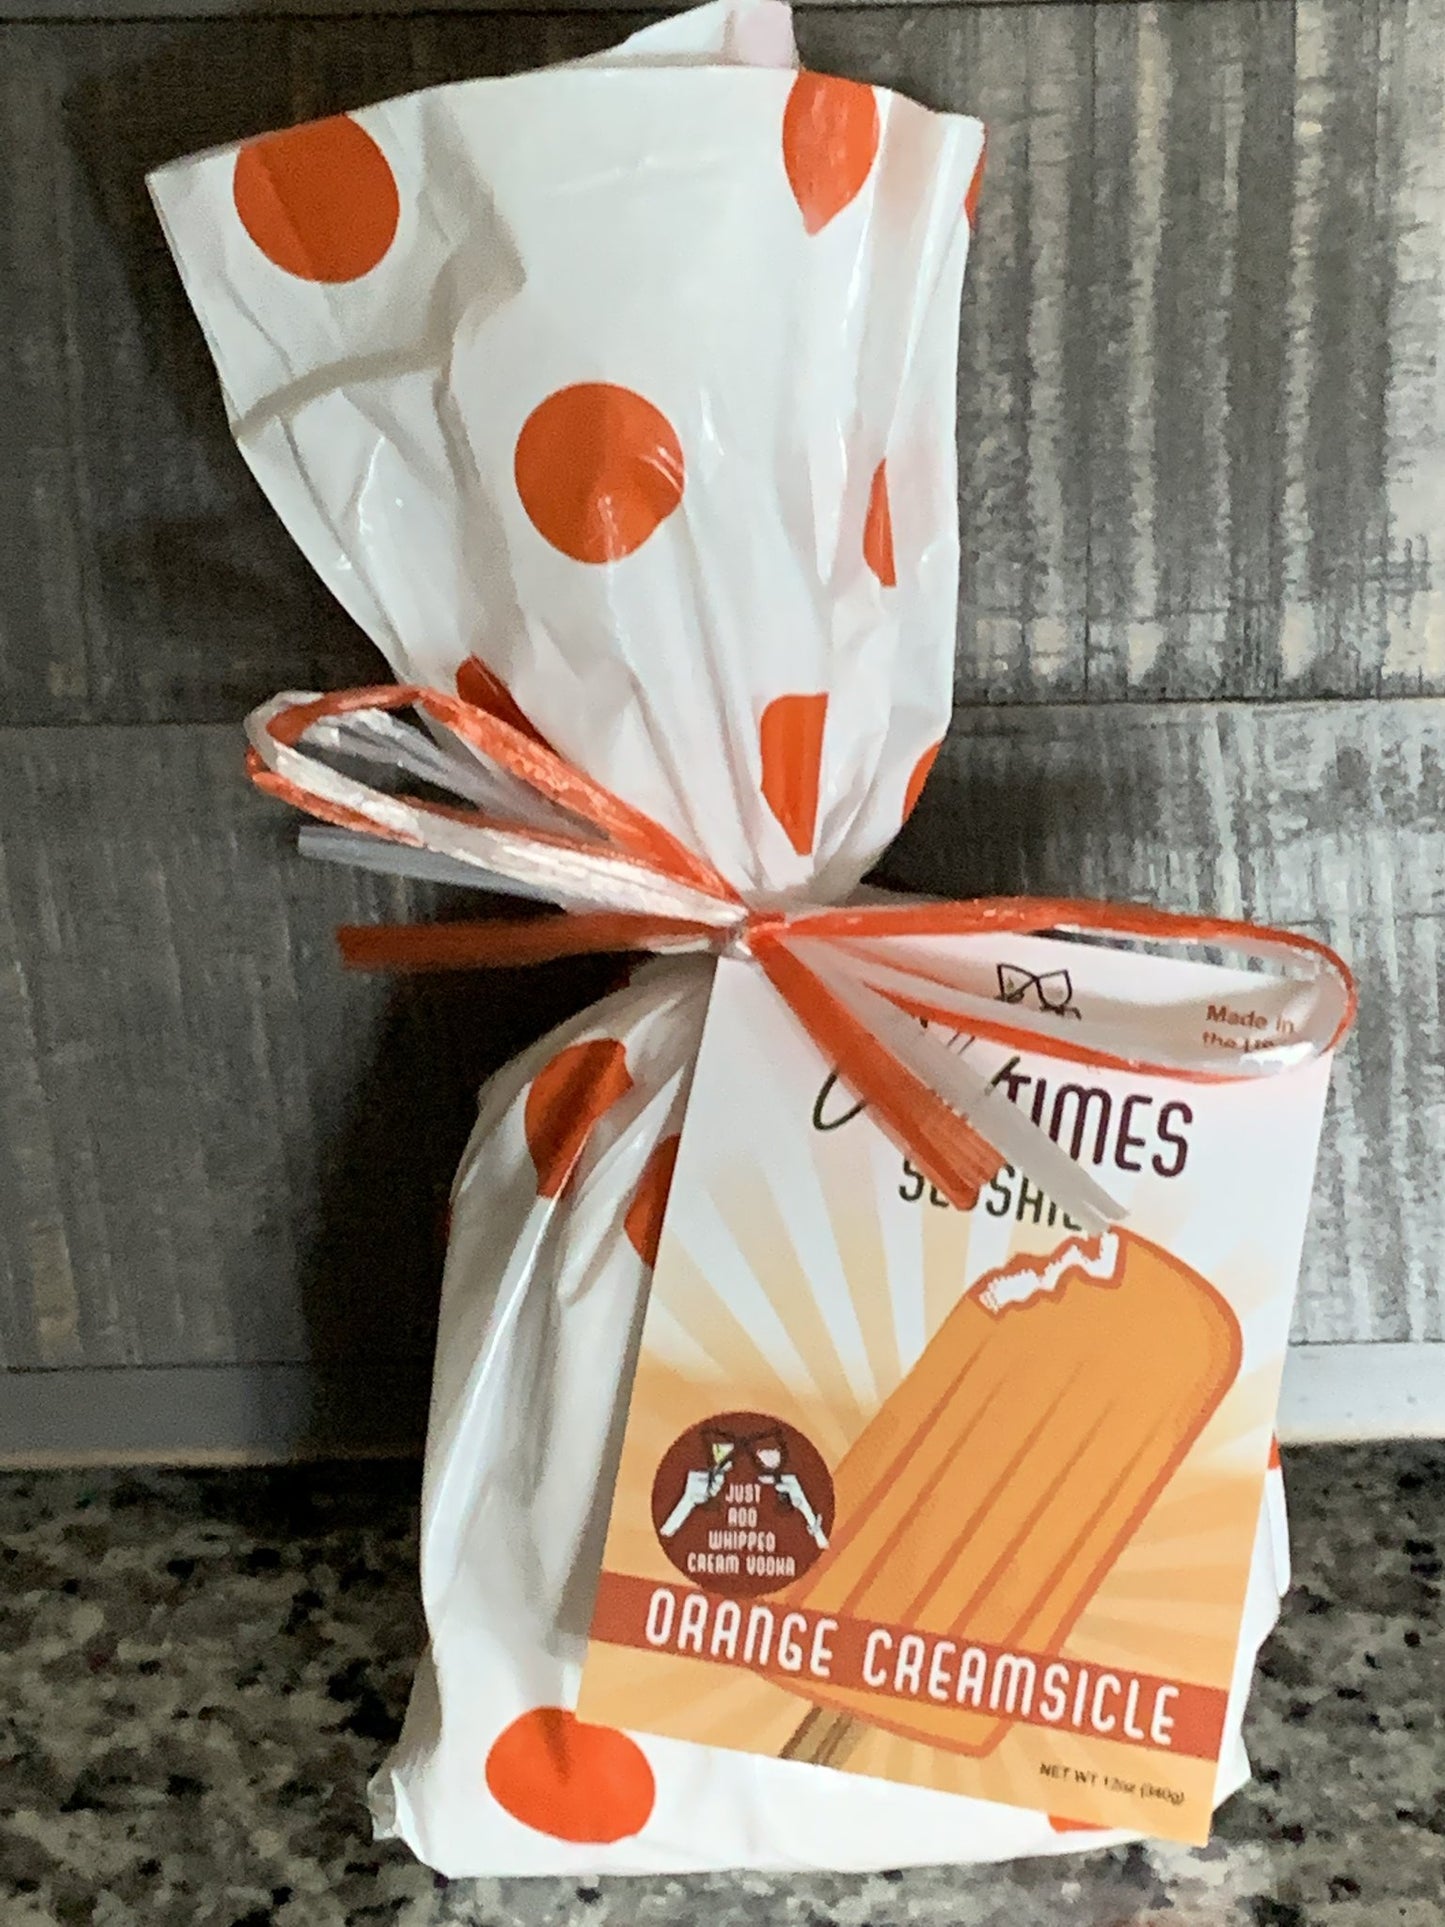 orange creamsicle slushie mix package displayed on a granite countertop